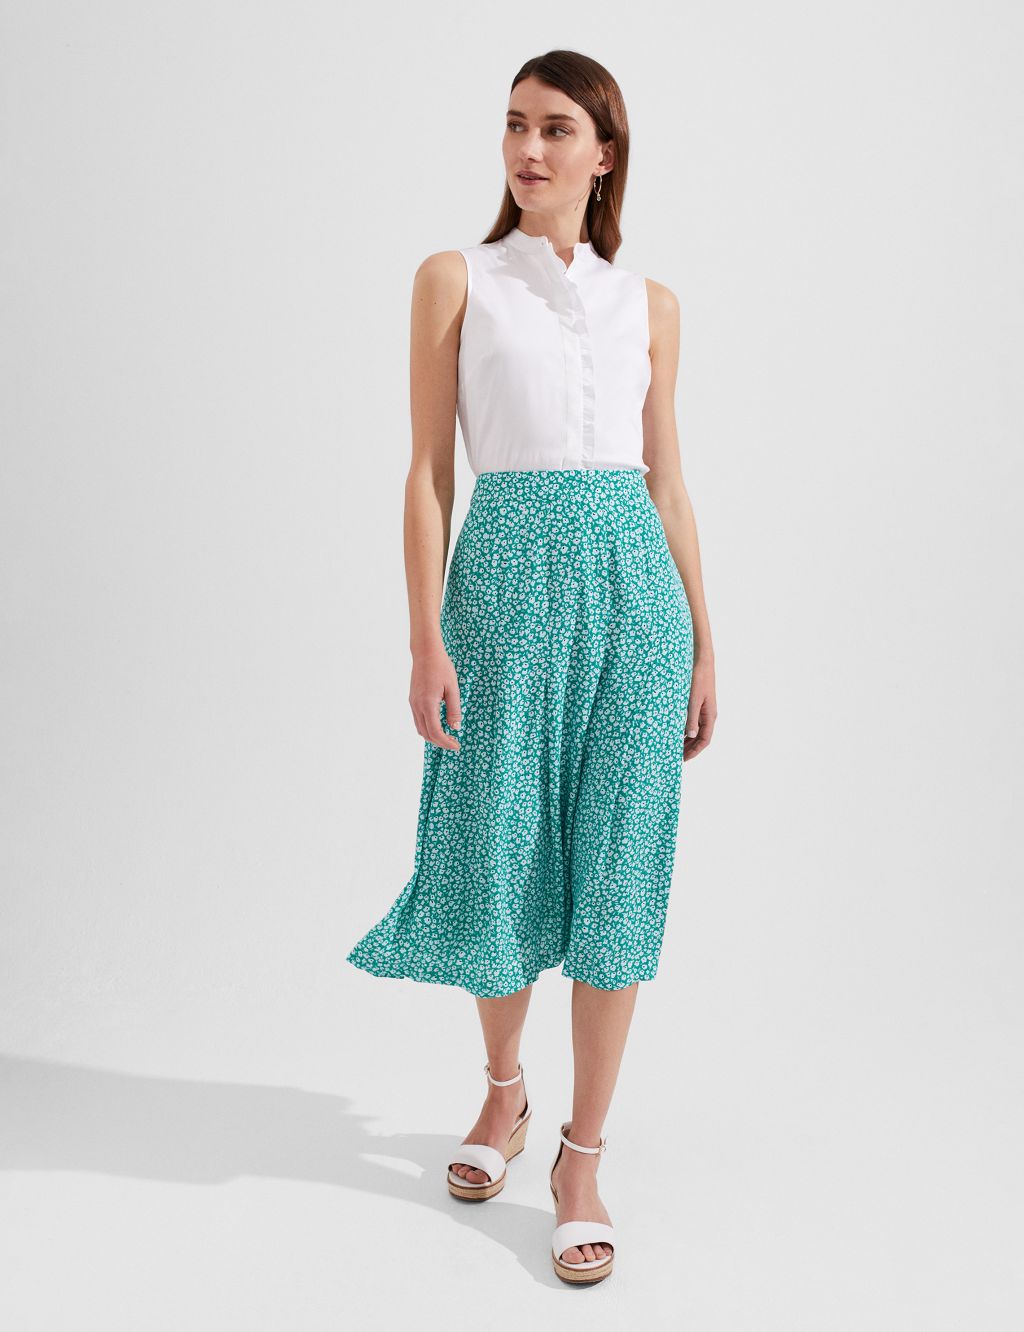 Floral Pleated Midi A-Line Skirt image 1